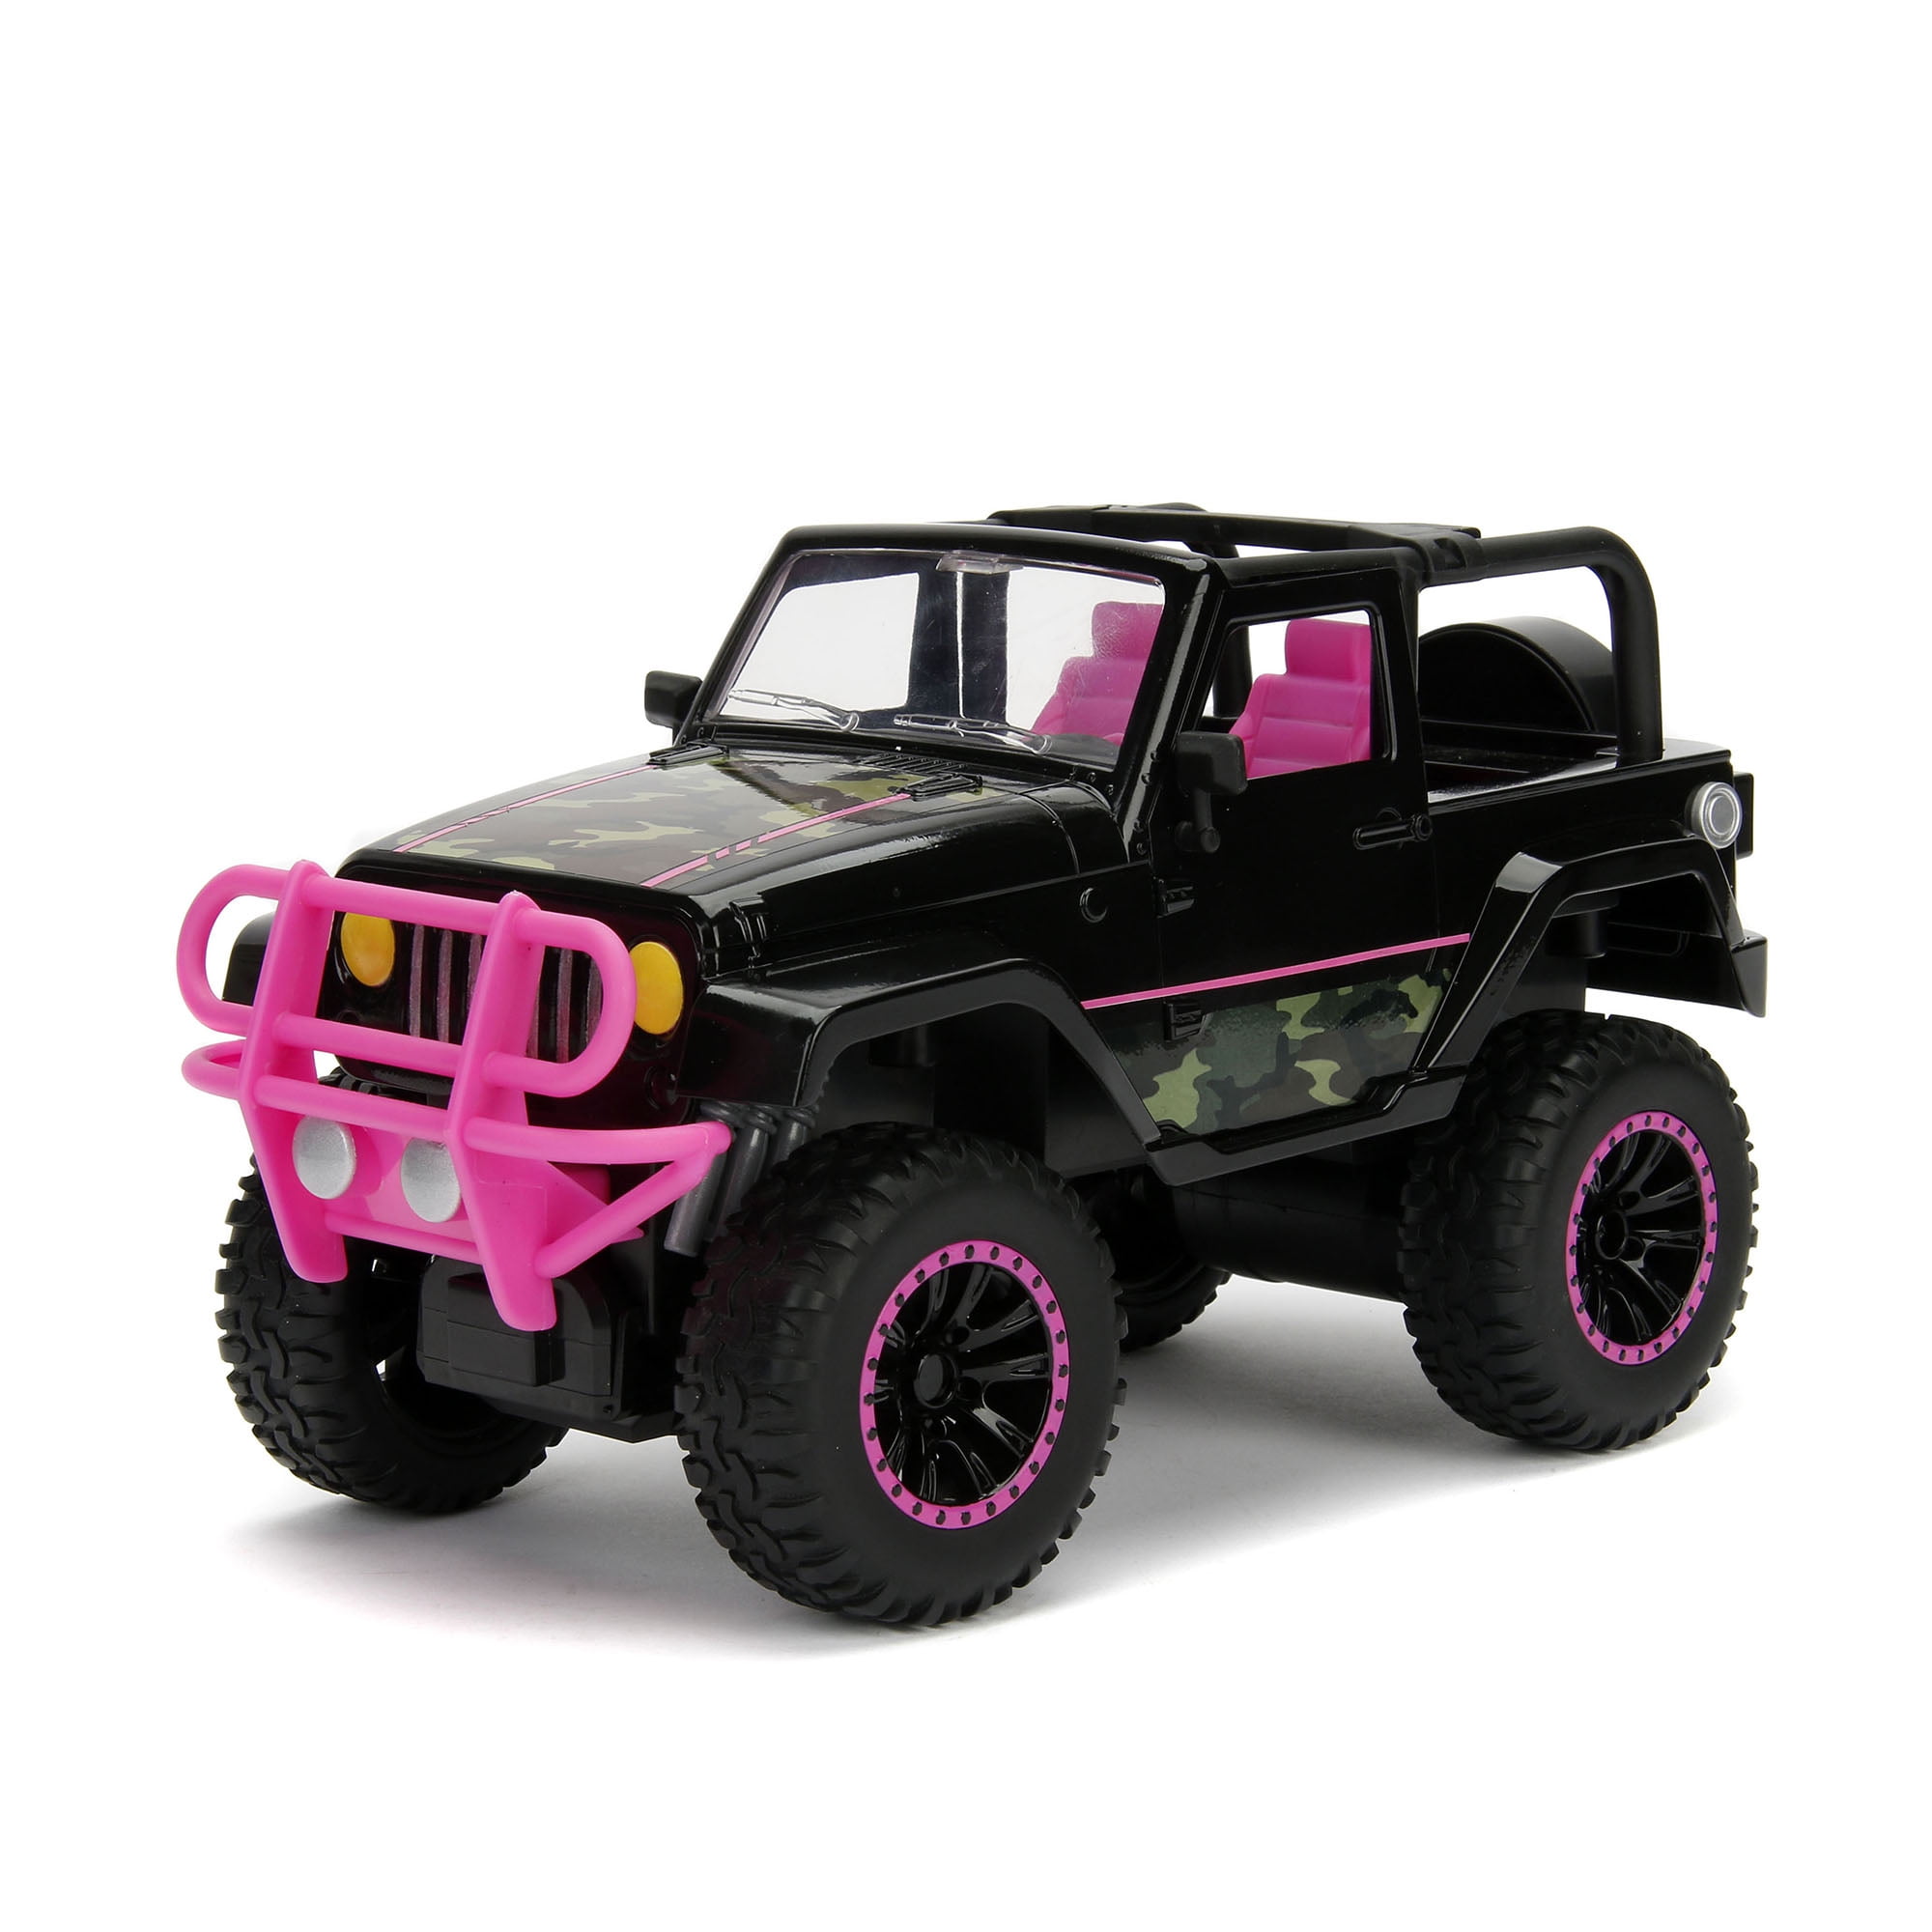 Jada Toys Girlmazing Jeep Wrangler RC Car 1 16 Scale Remote Control BLACK /& Camo